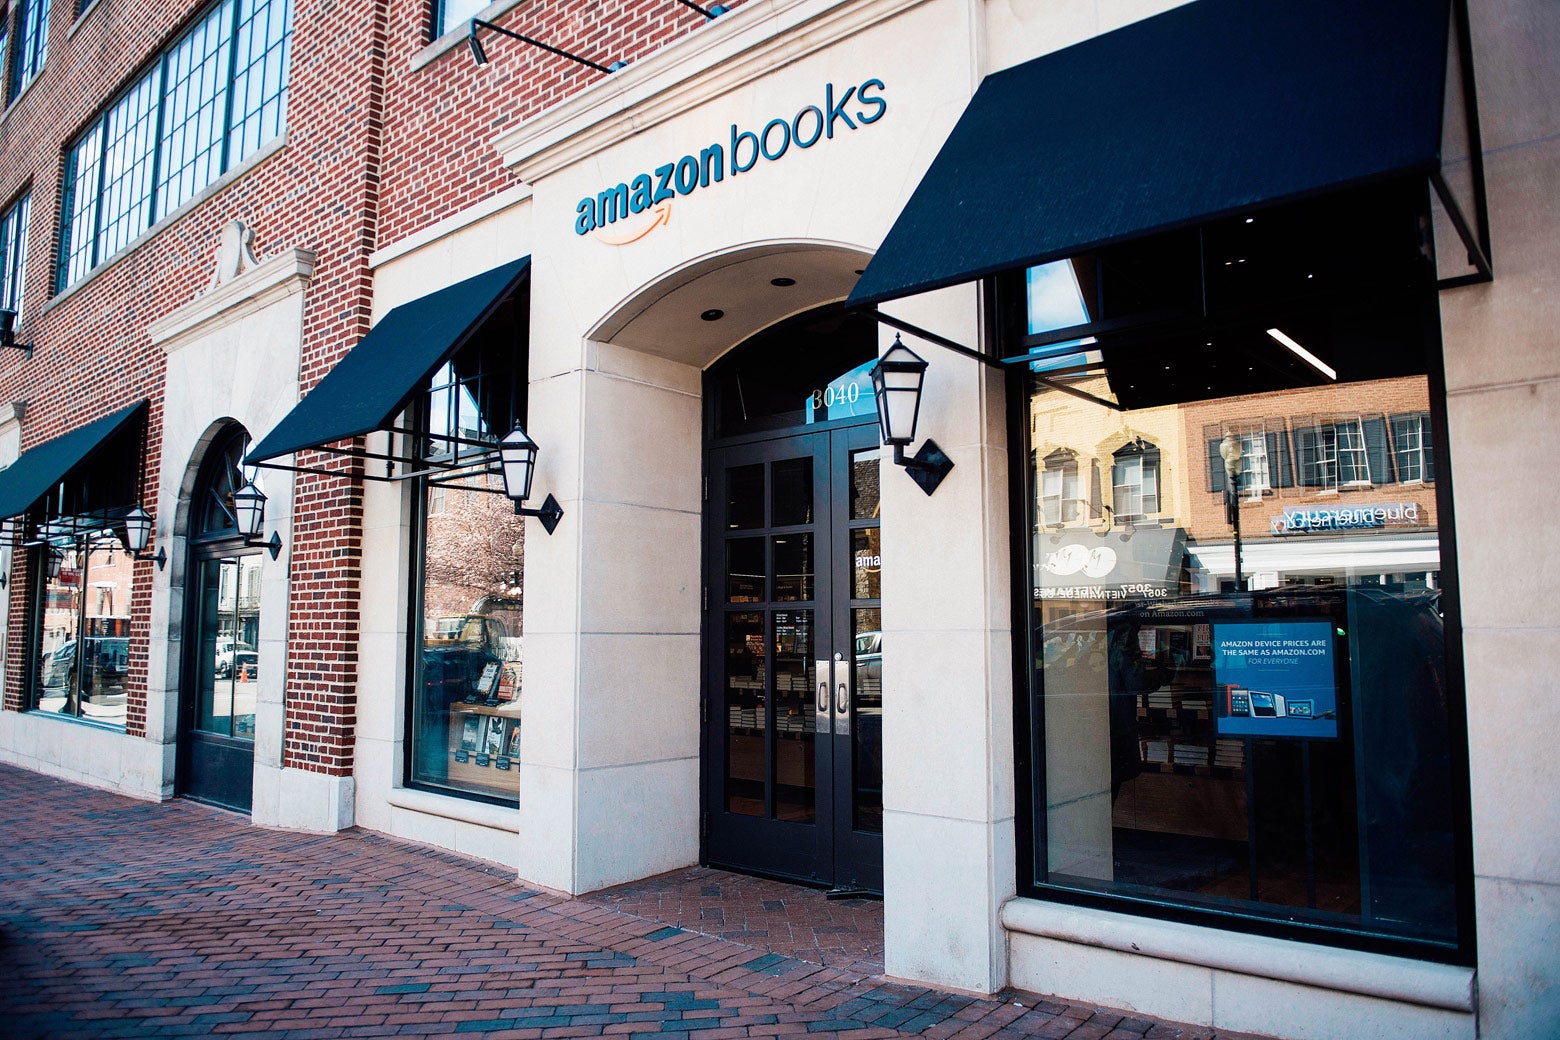 An Amazon Books store